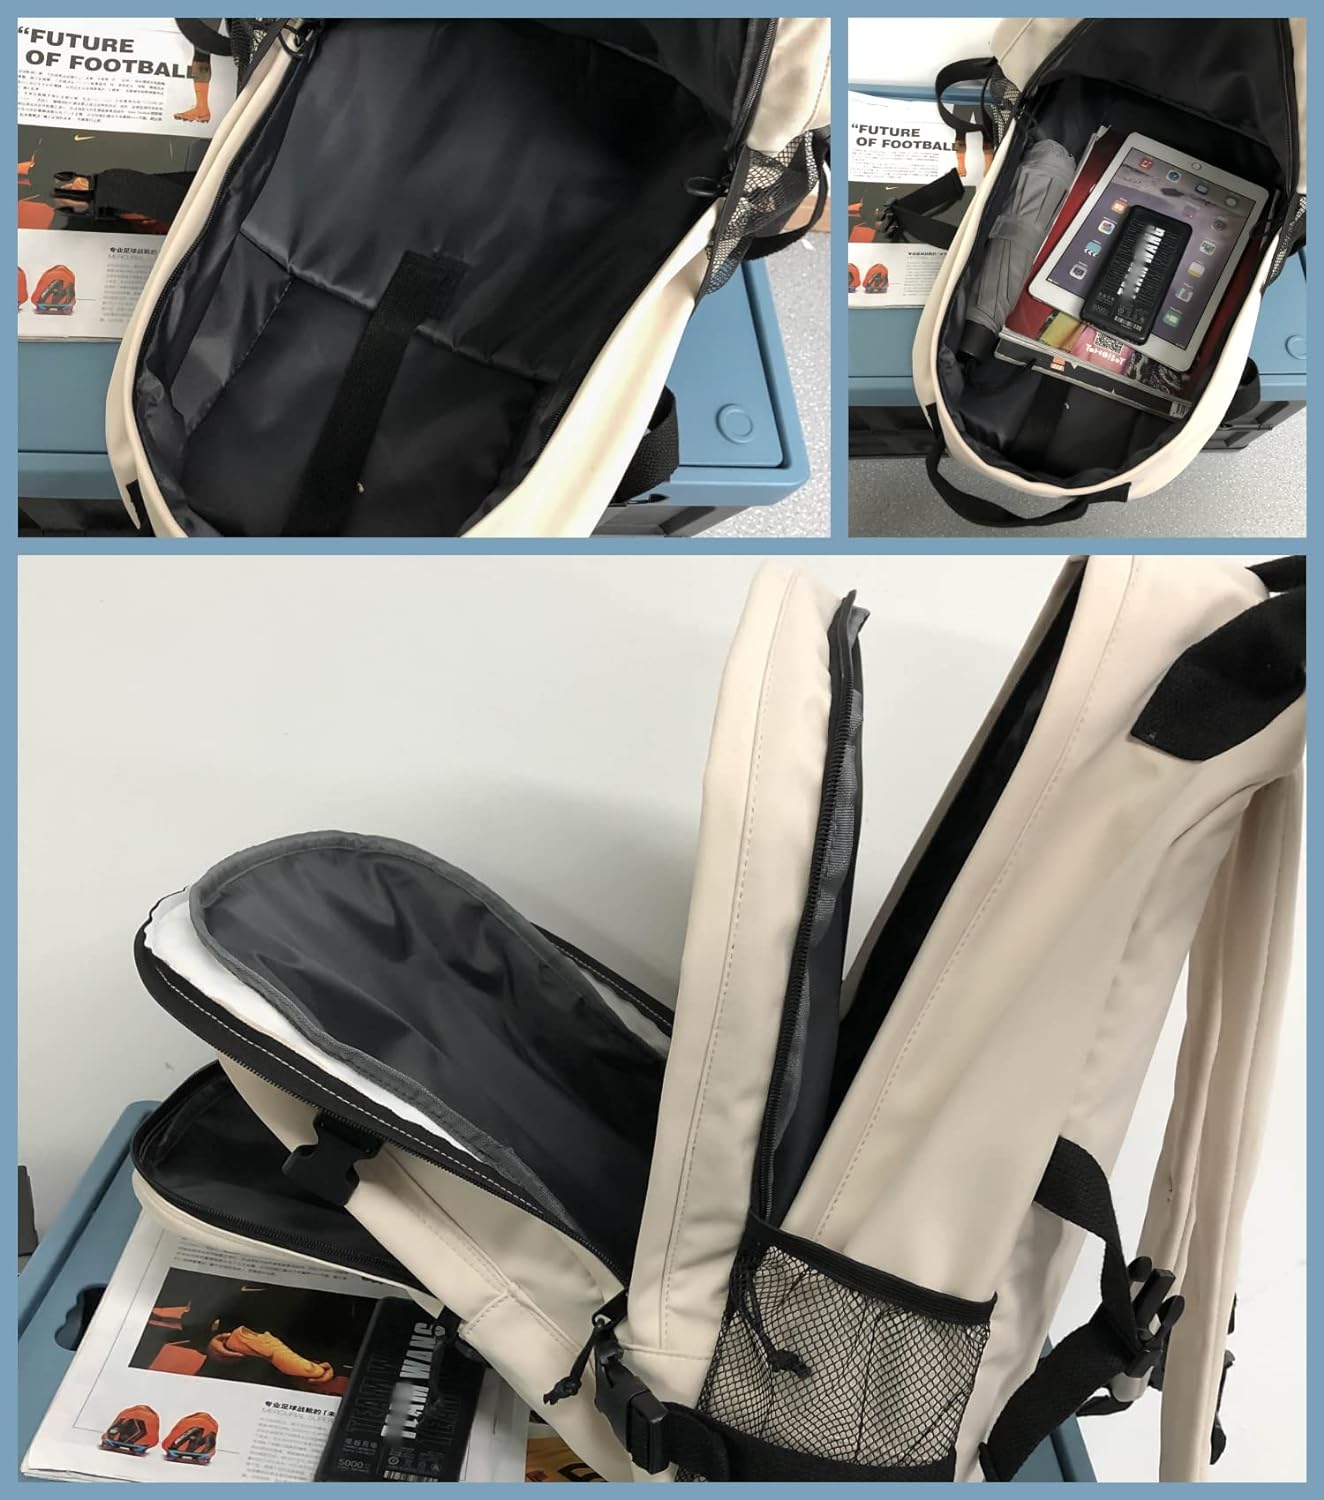 Leaper Water-resistant Laptop Backpacks for Women Lightweight Bag Casual Bookbag Black